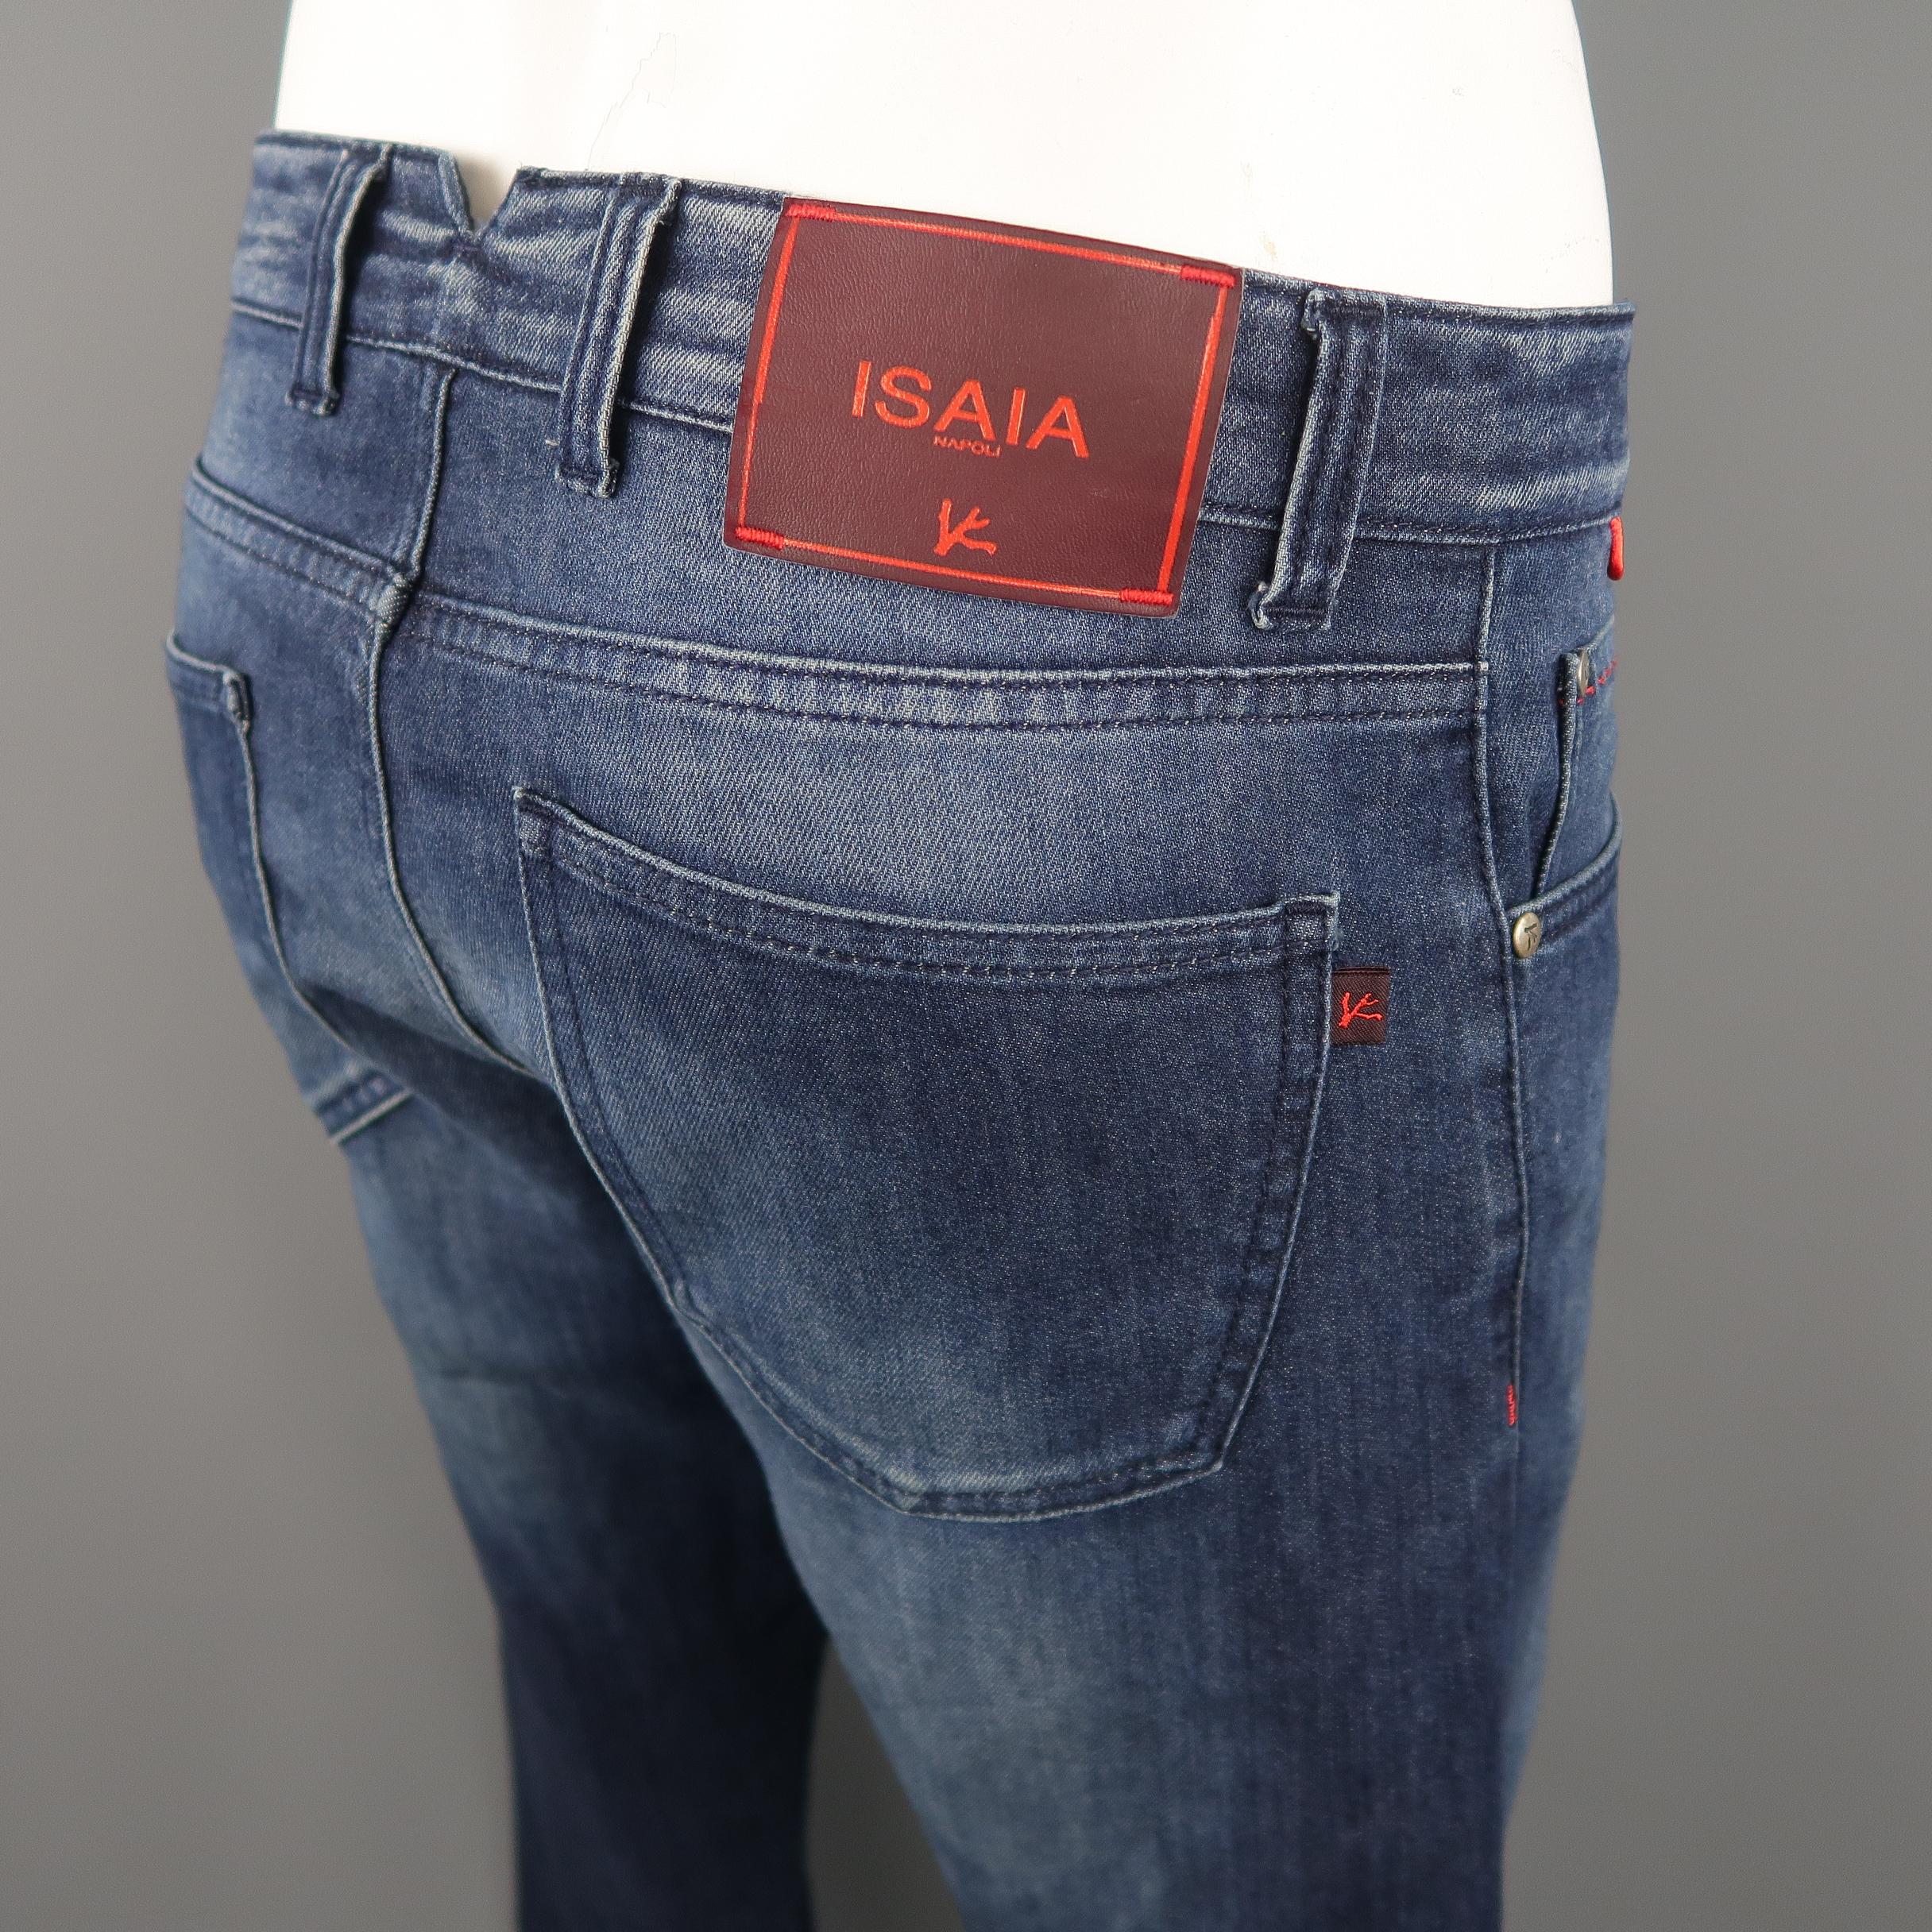 ISAIA Size 34 Indigo Wash Selvedge Denim Jeans 1